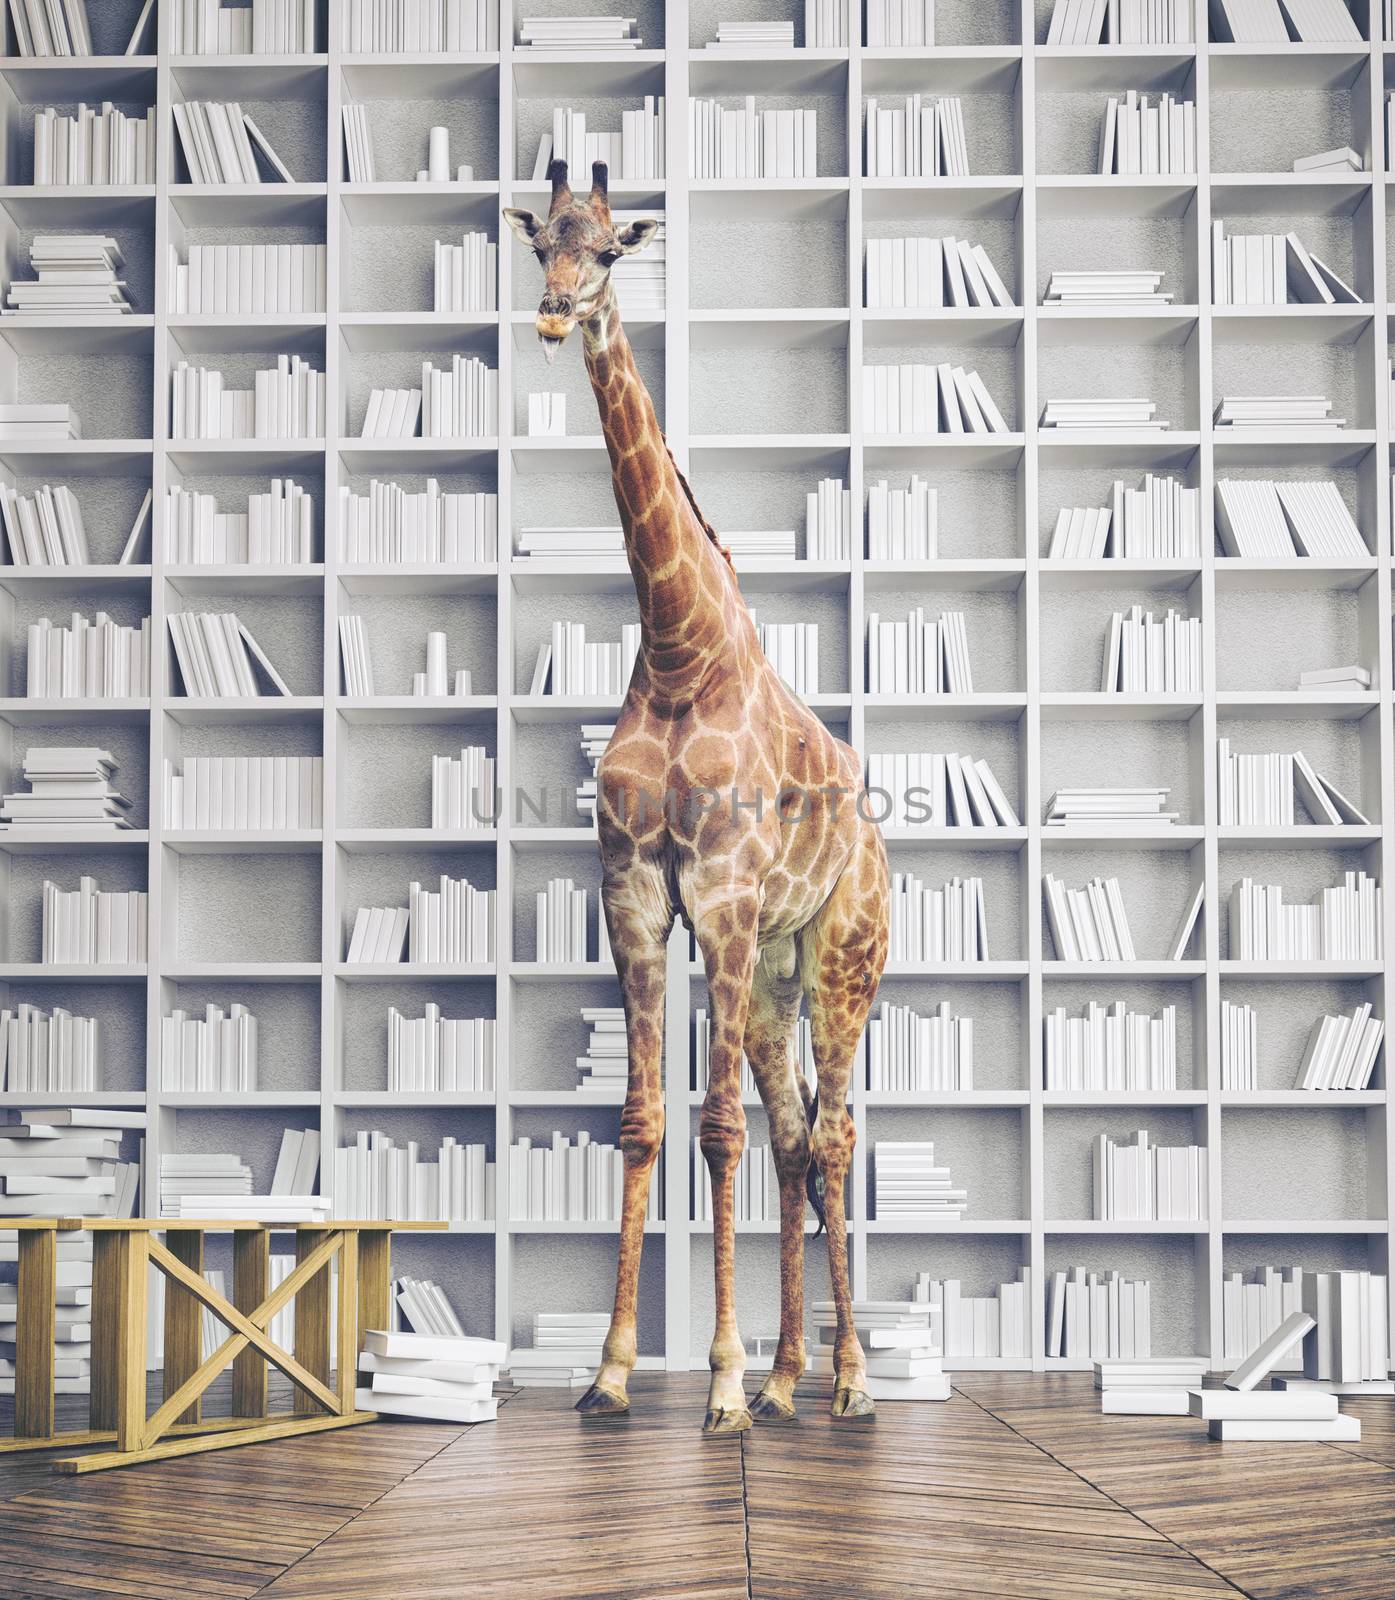 giraffe in the room  by vicnt